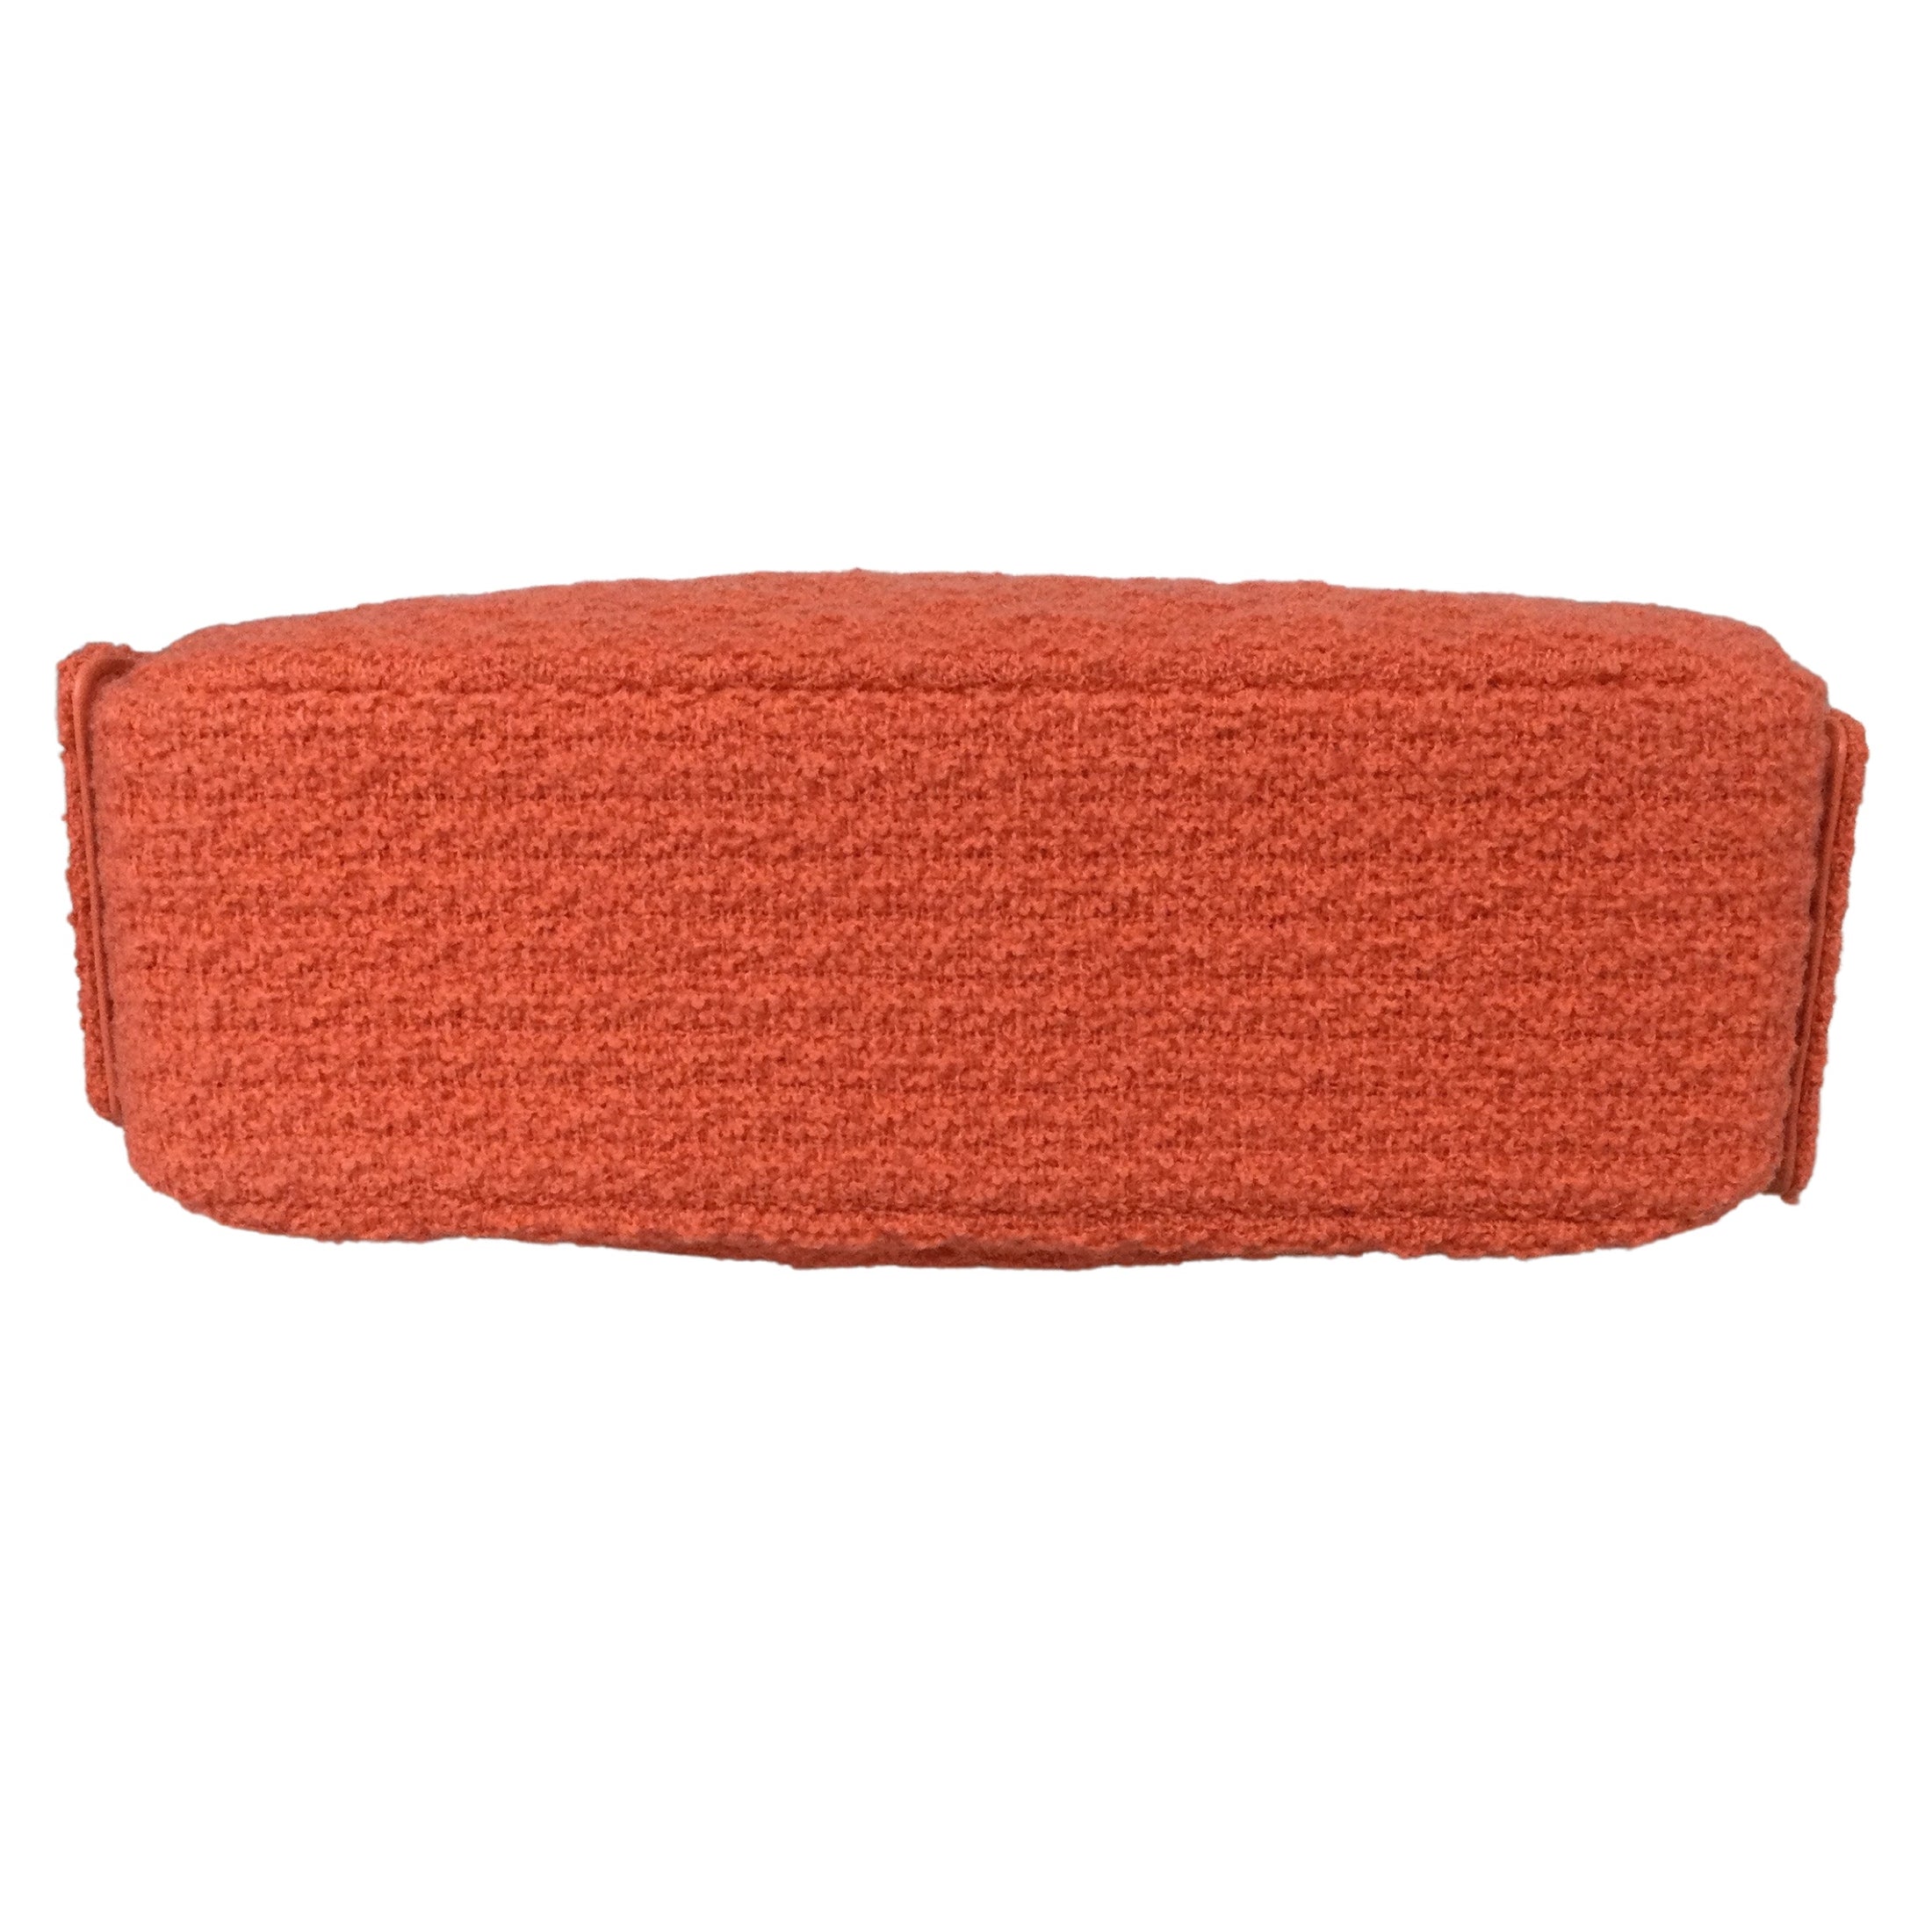 Chanel Boucle 2020 Bright Coral Knit Shoulder Bag